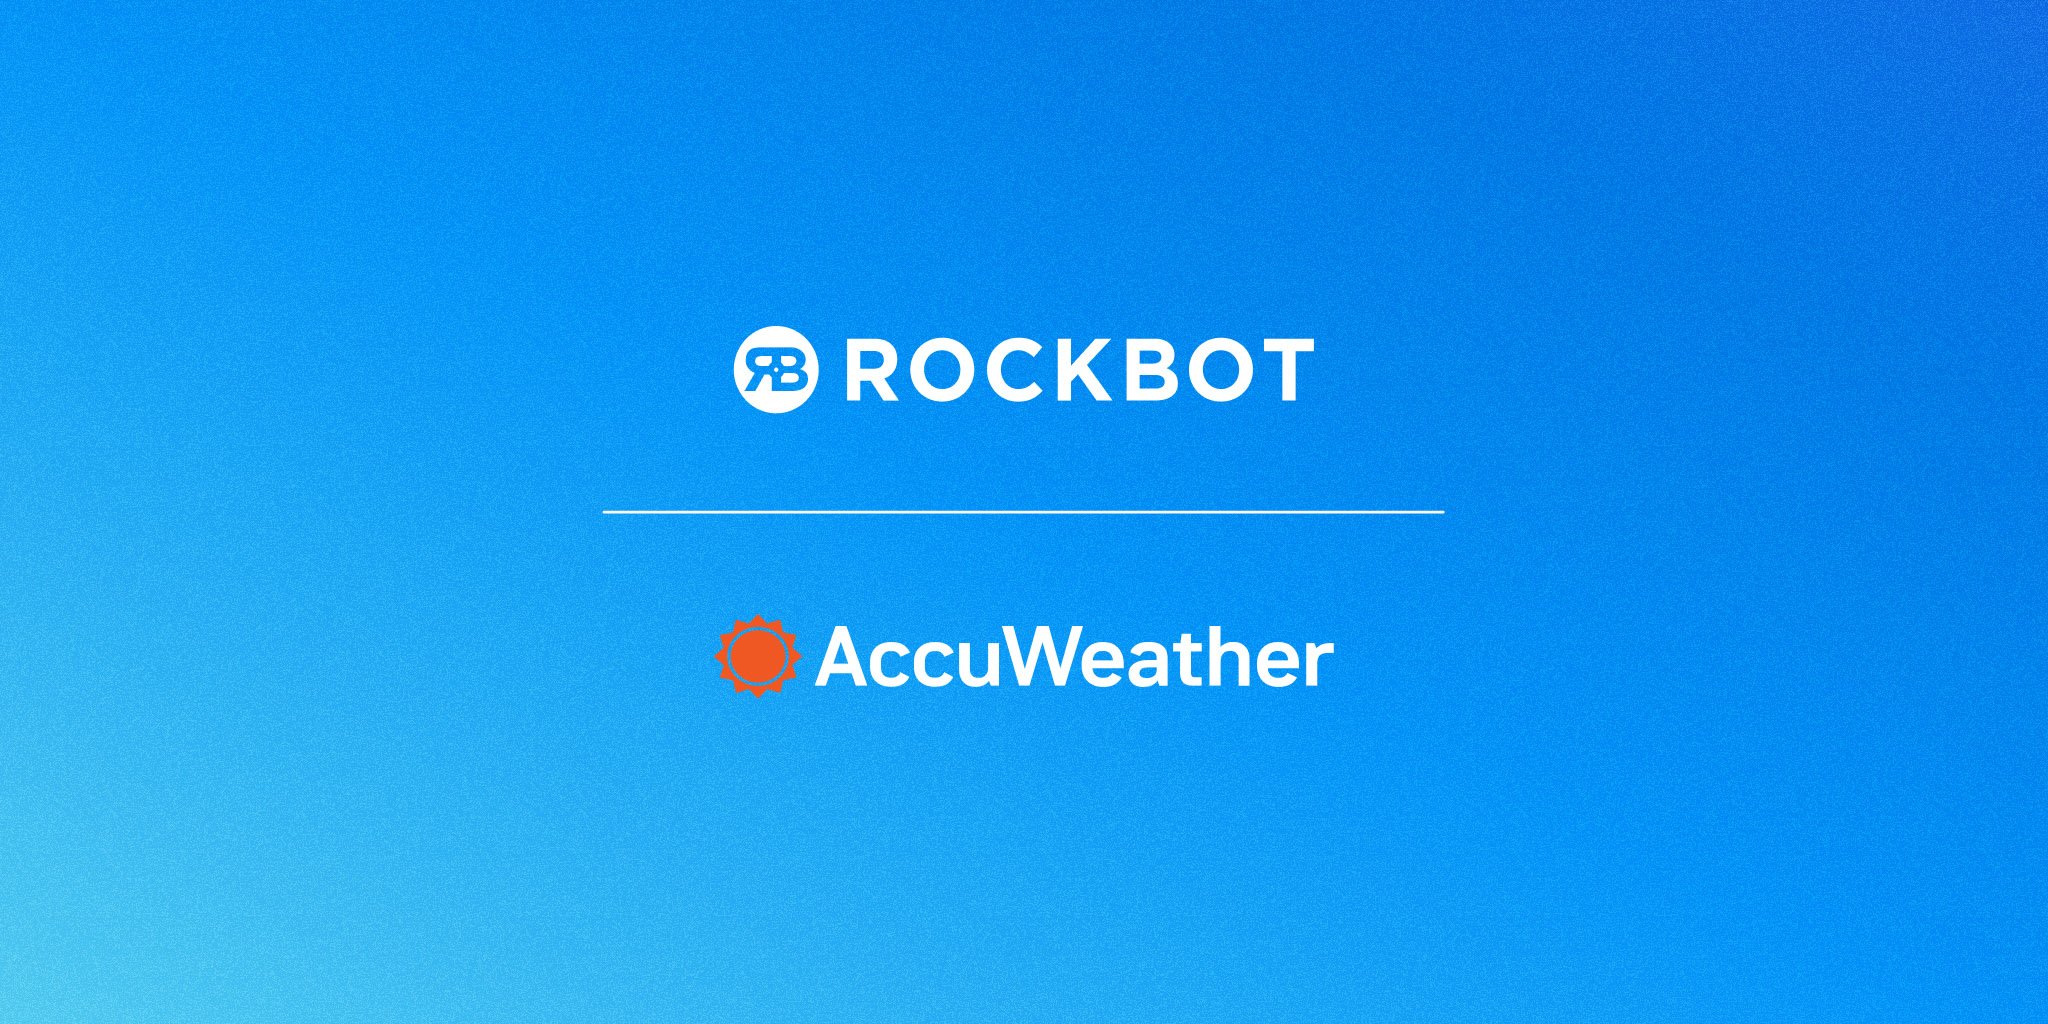 Rockbot and AccuWeather Logos